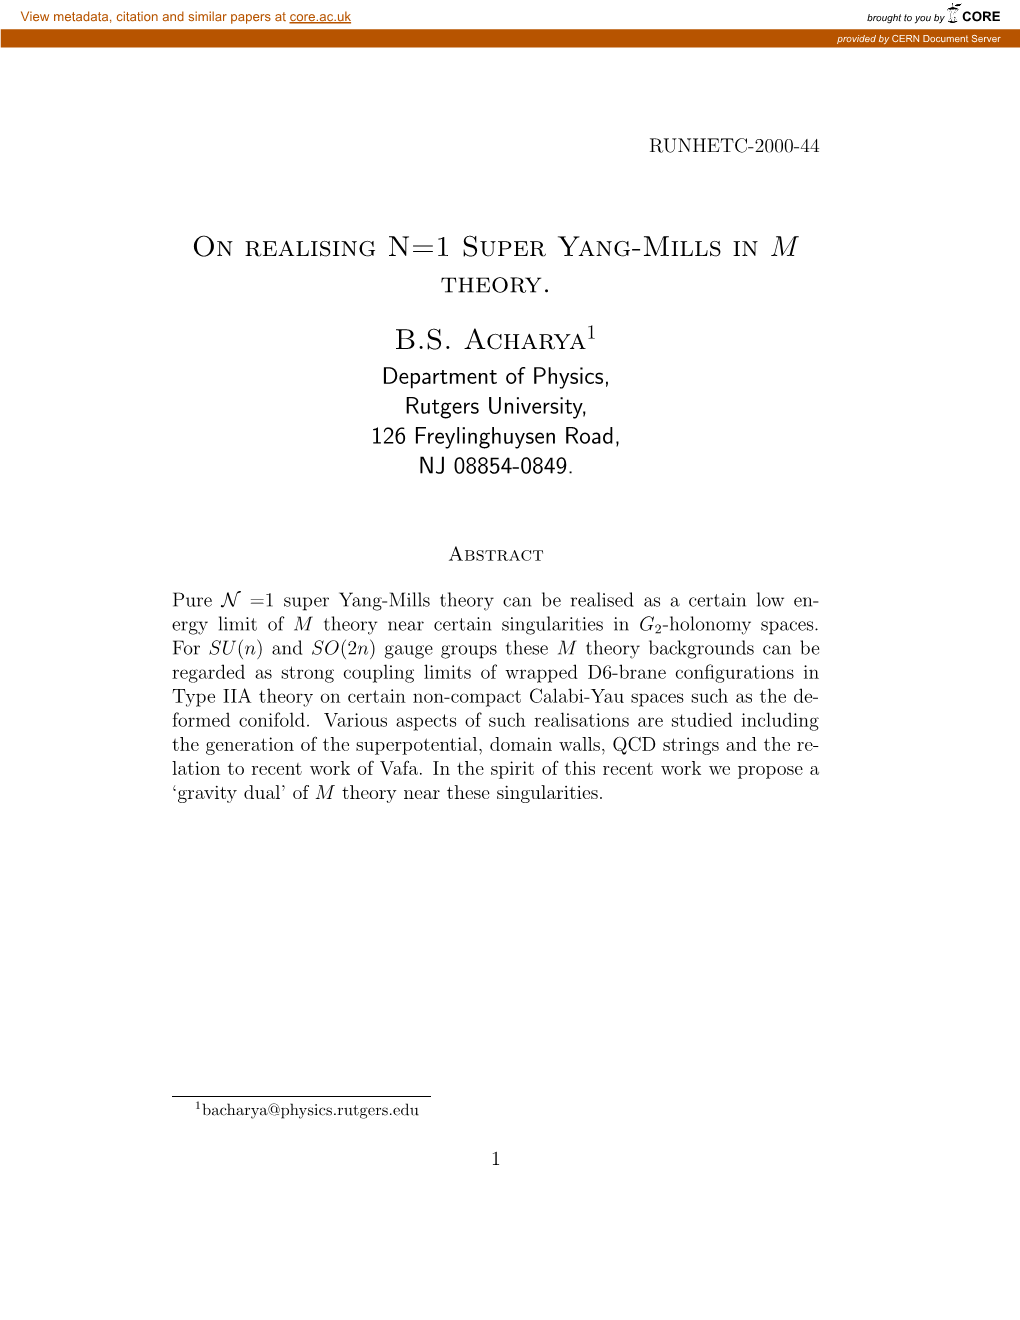 On Realising N=1 Super Yang-Mills in M Theory. B.S. Acharya1